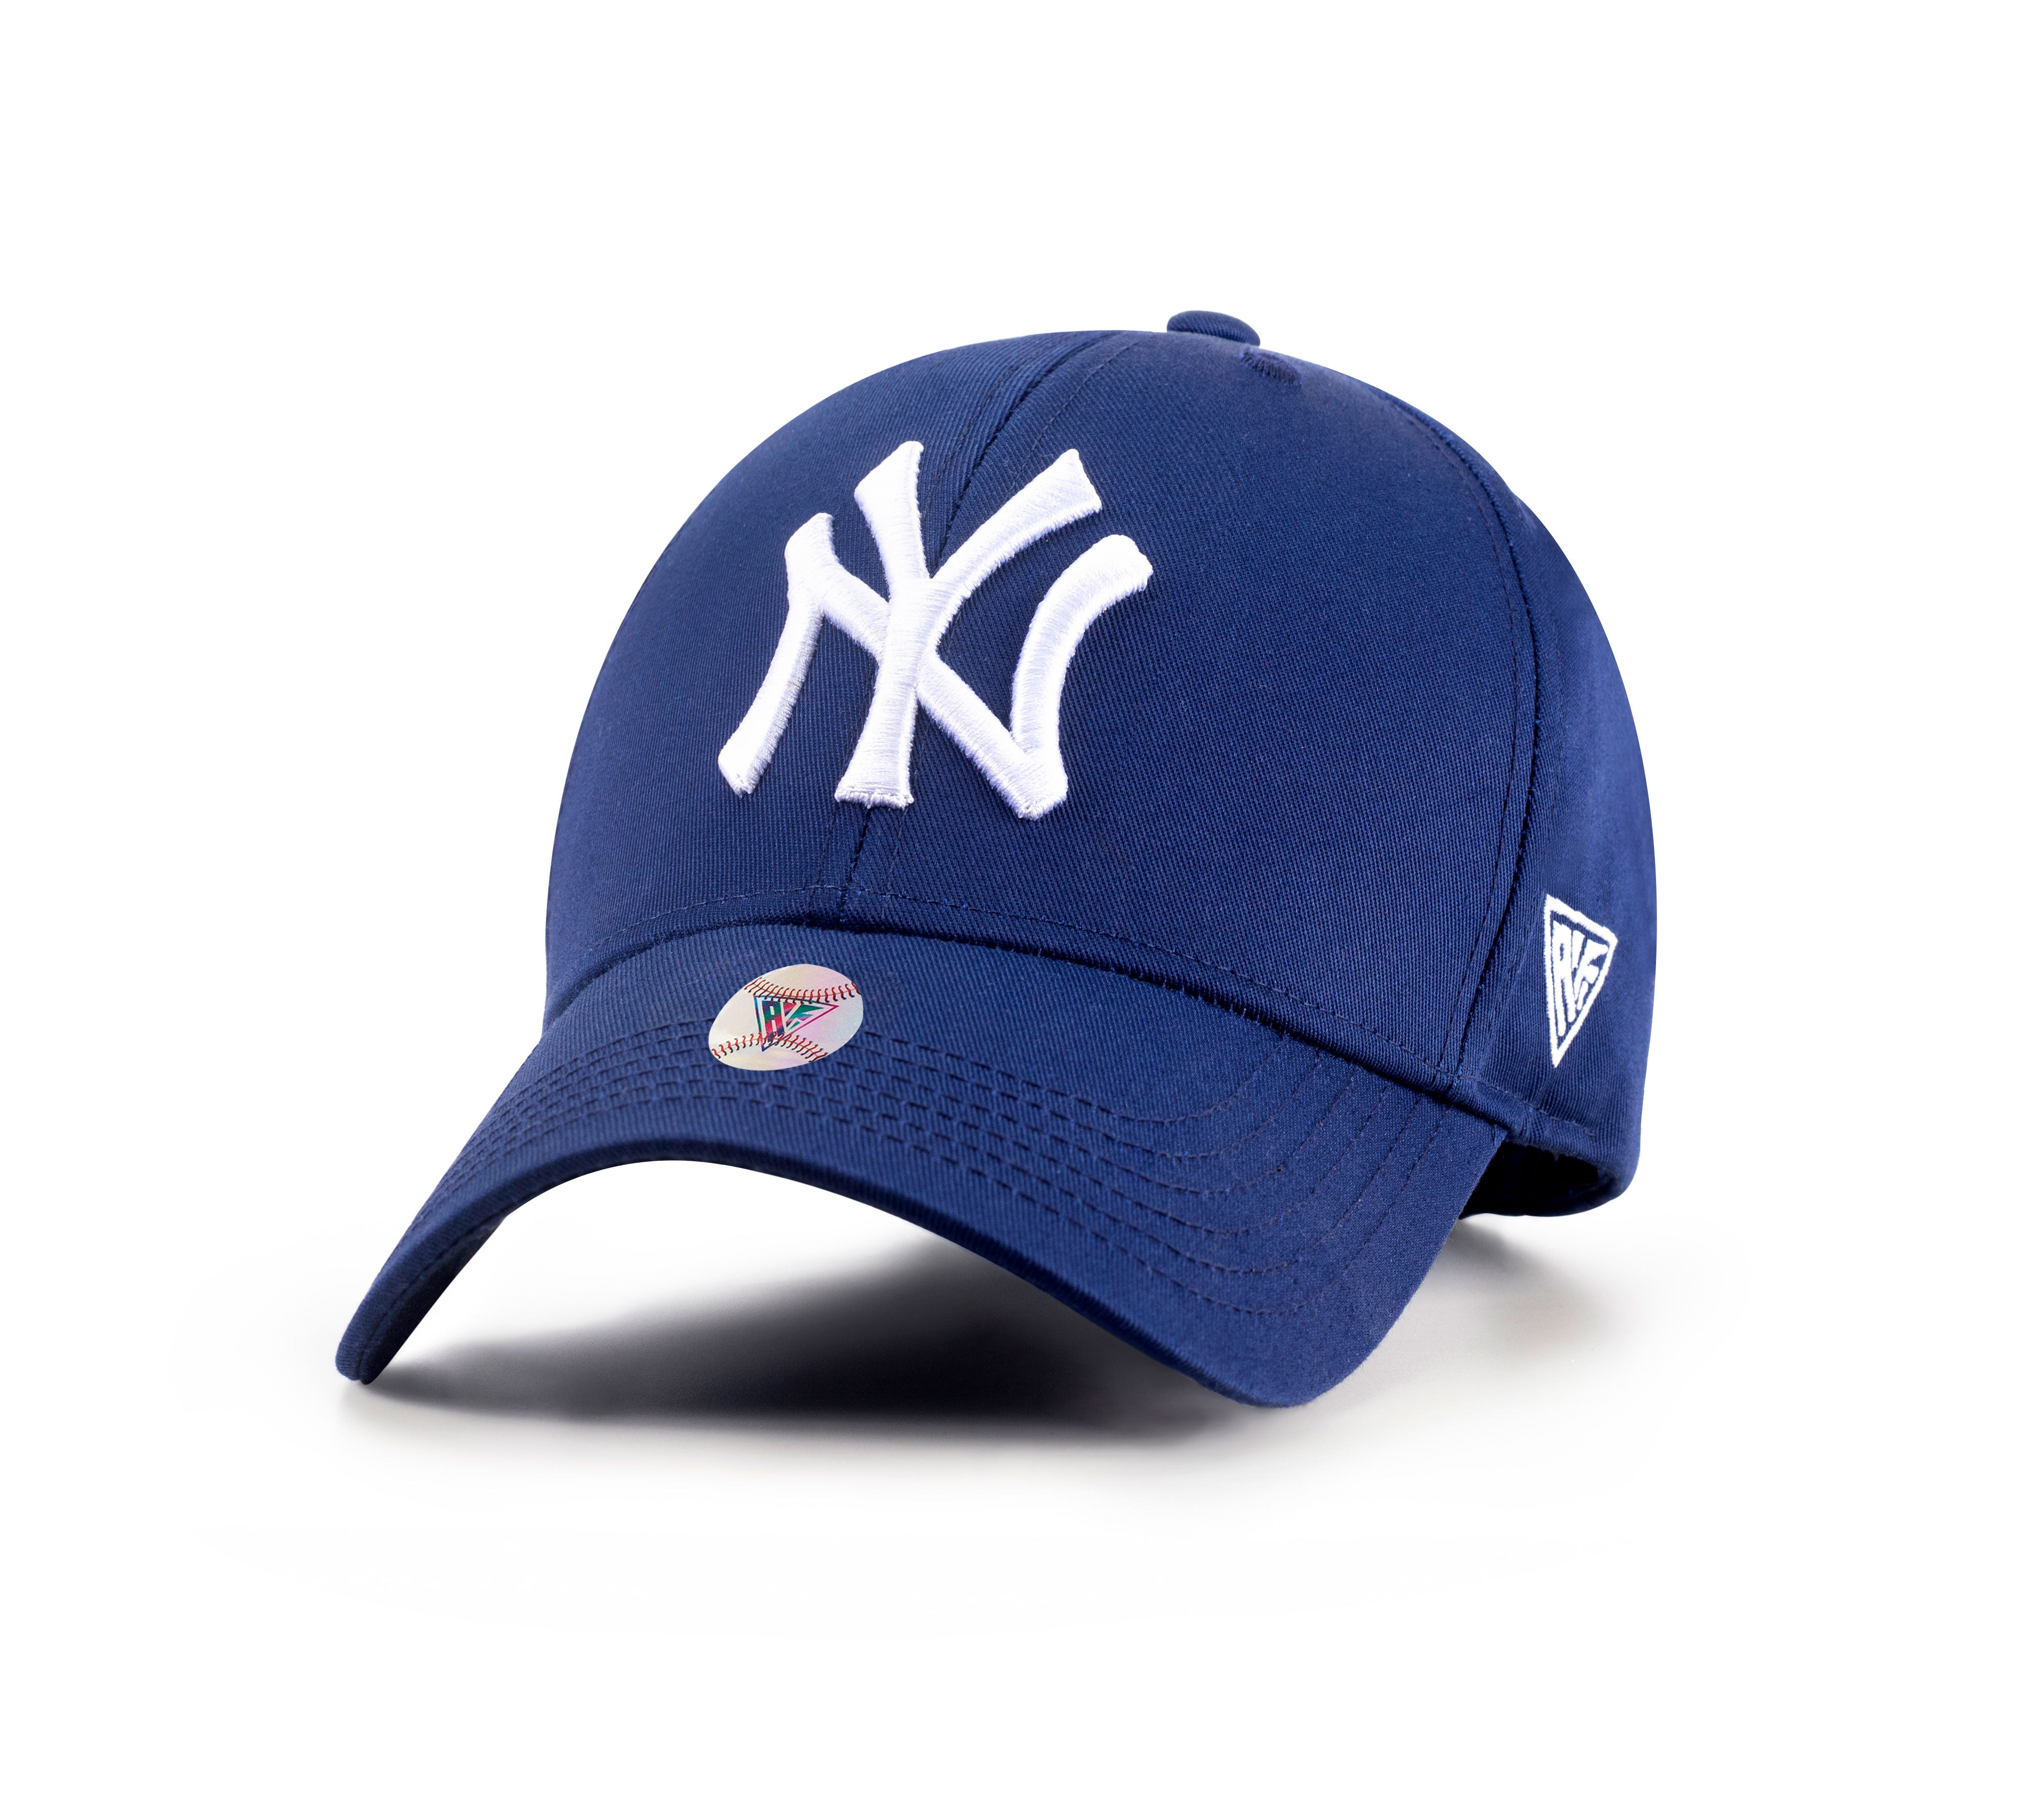 AK Sports US | Yankees Caps